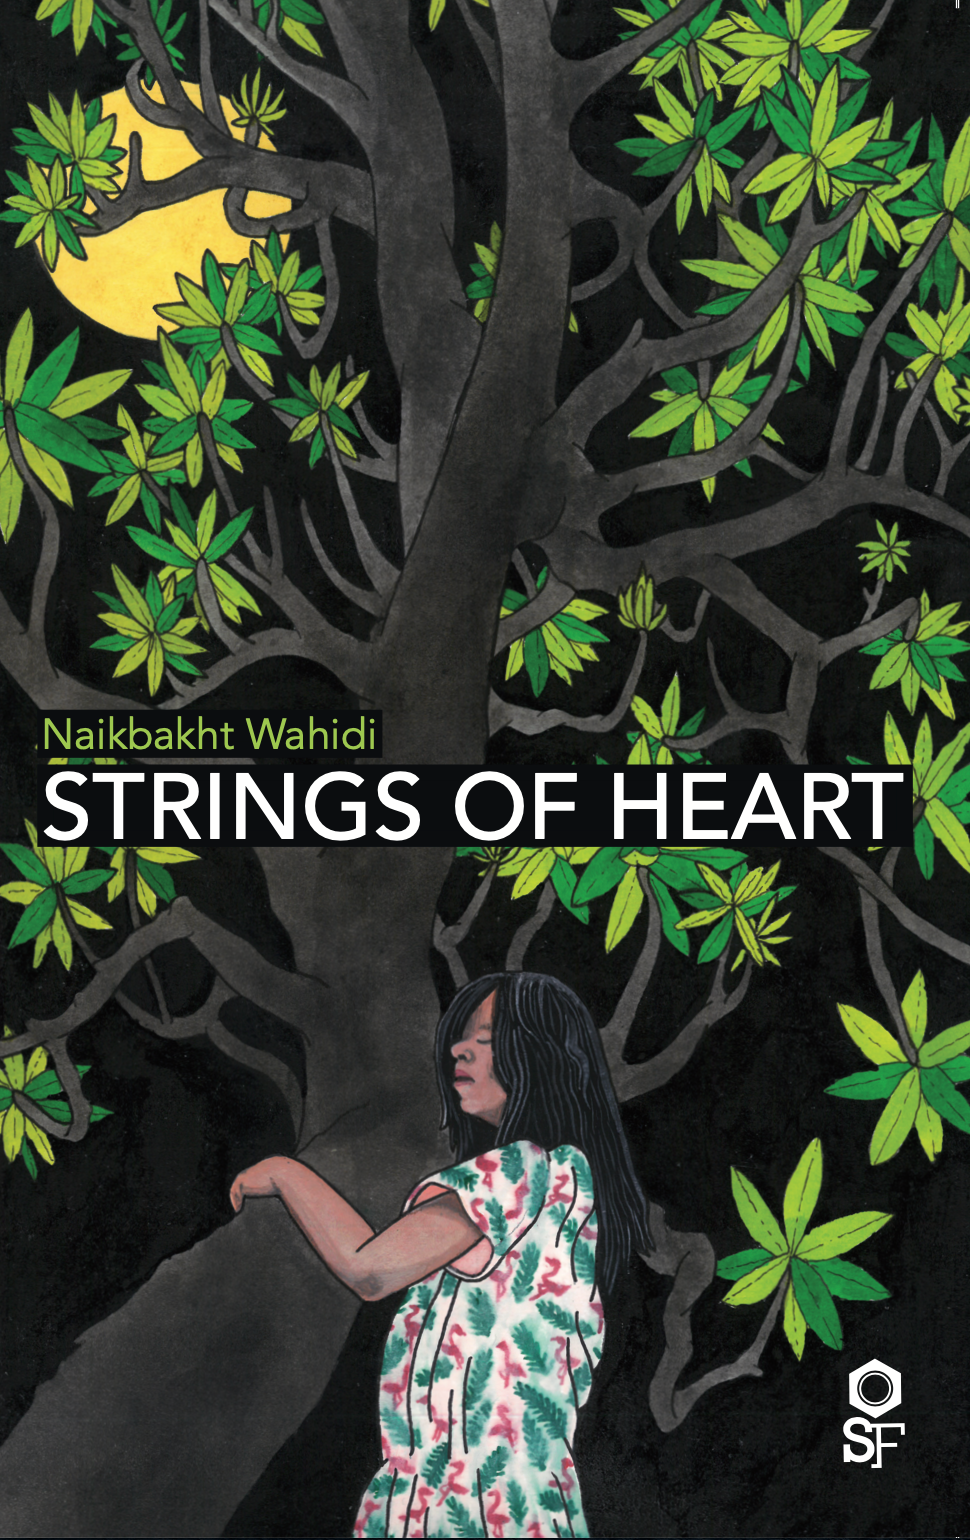 Strings Of Heart by Naikbahkt Wahidi